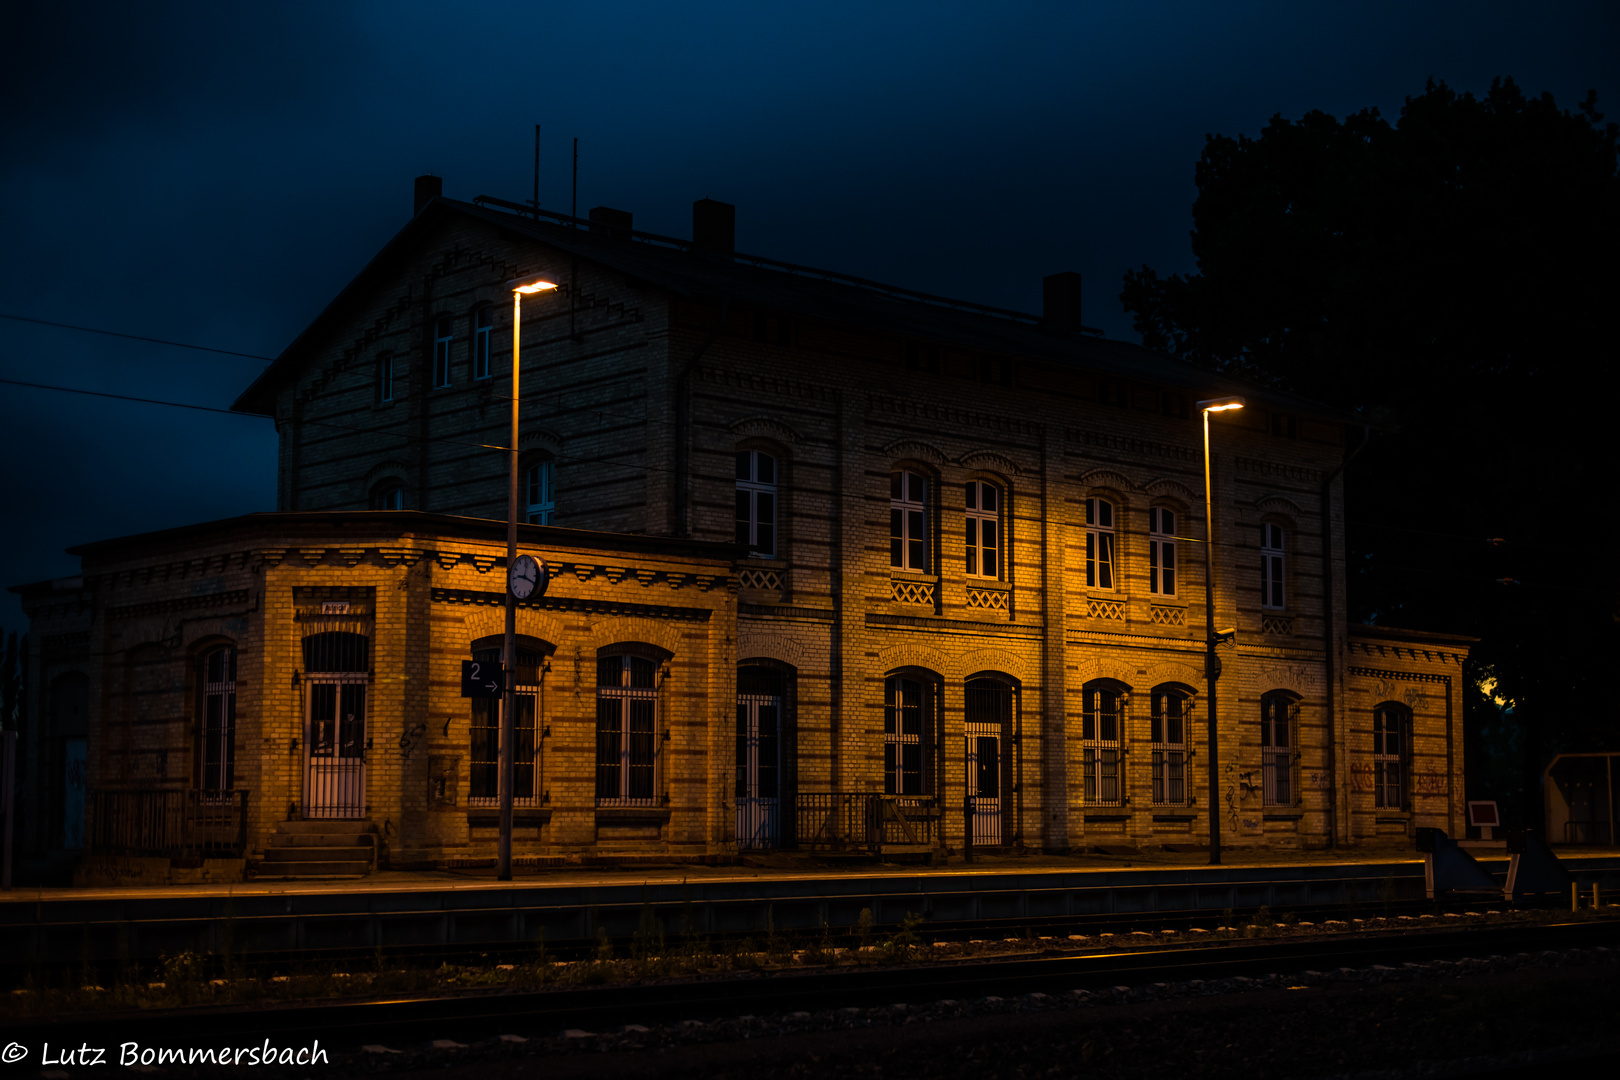 Bahnhof Halle/Trotha